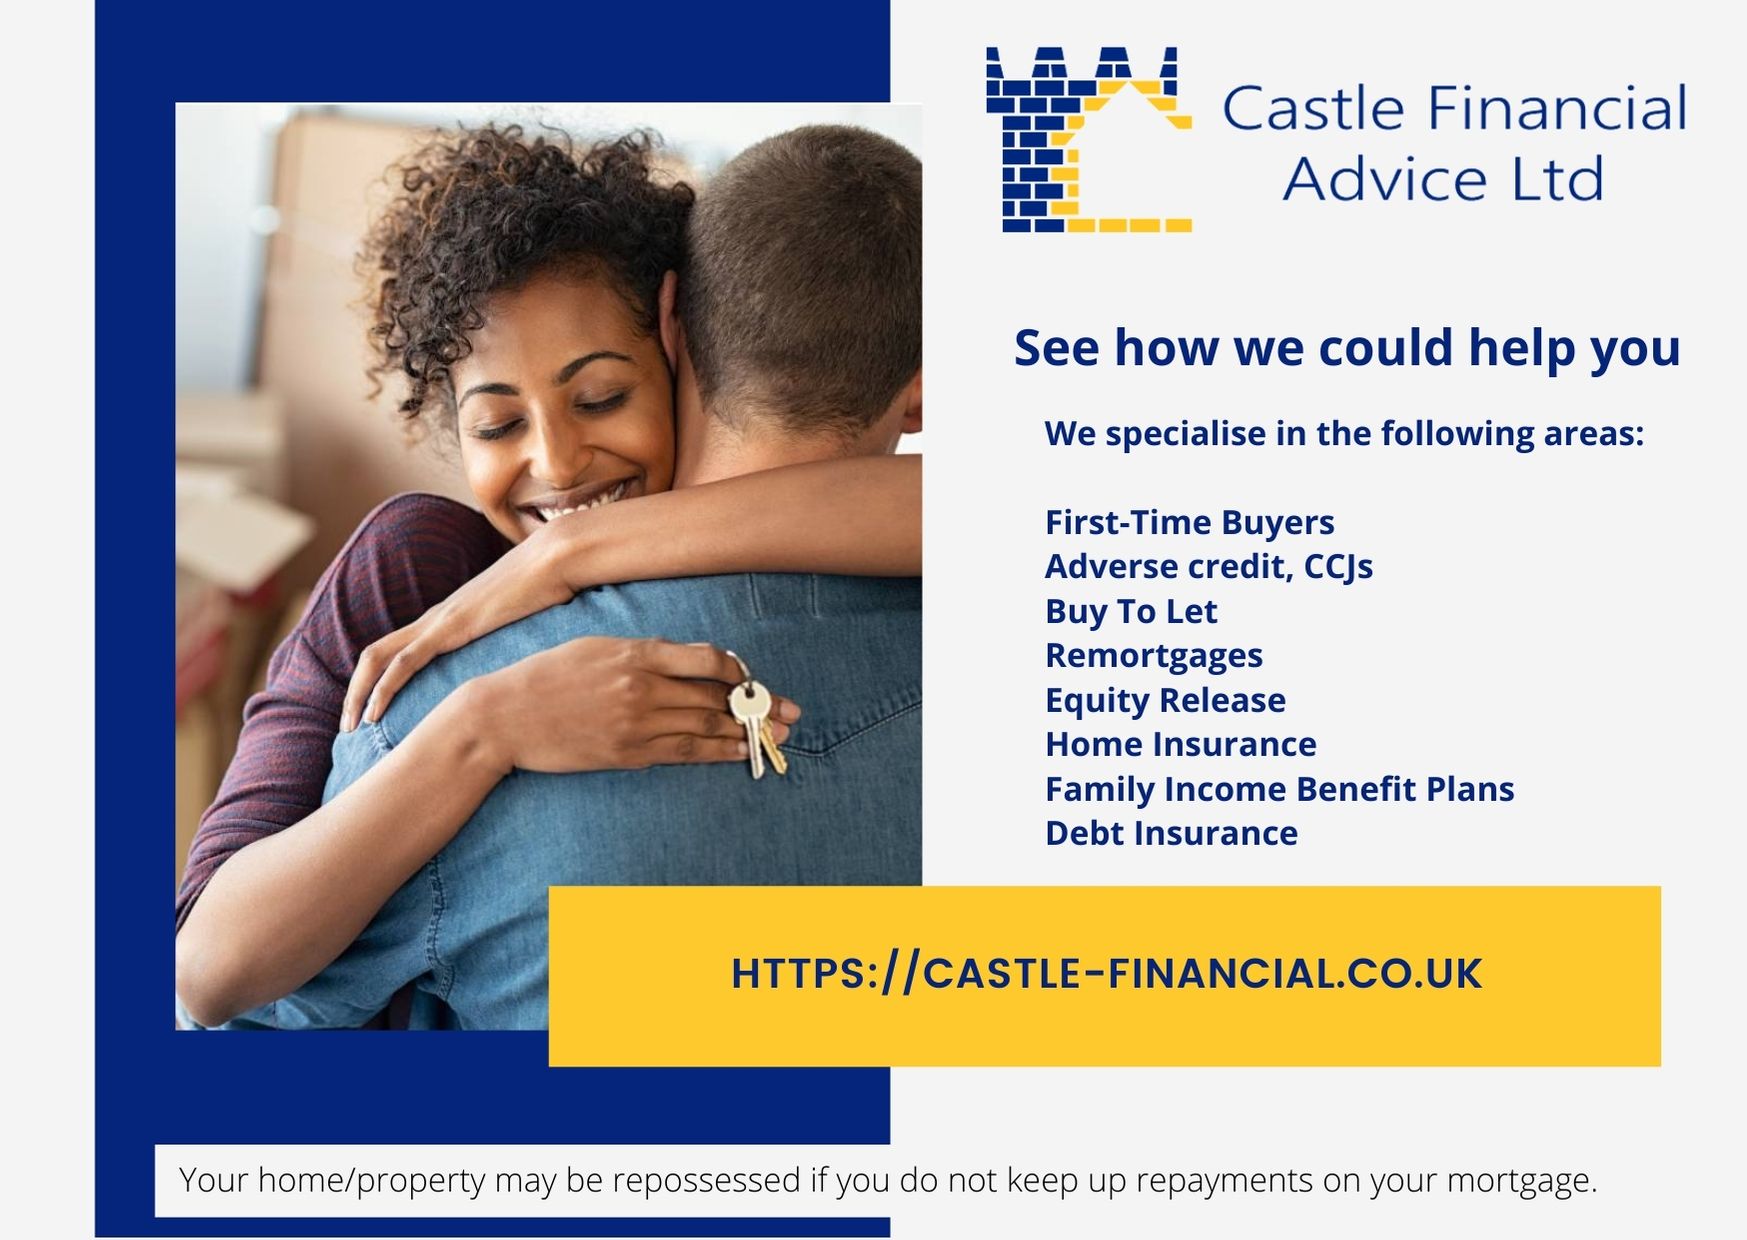 Castle Financial Advice Ltd